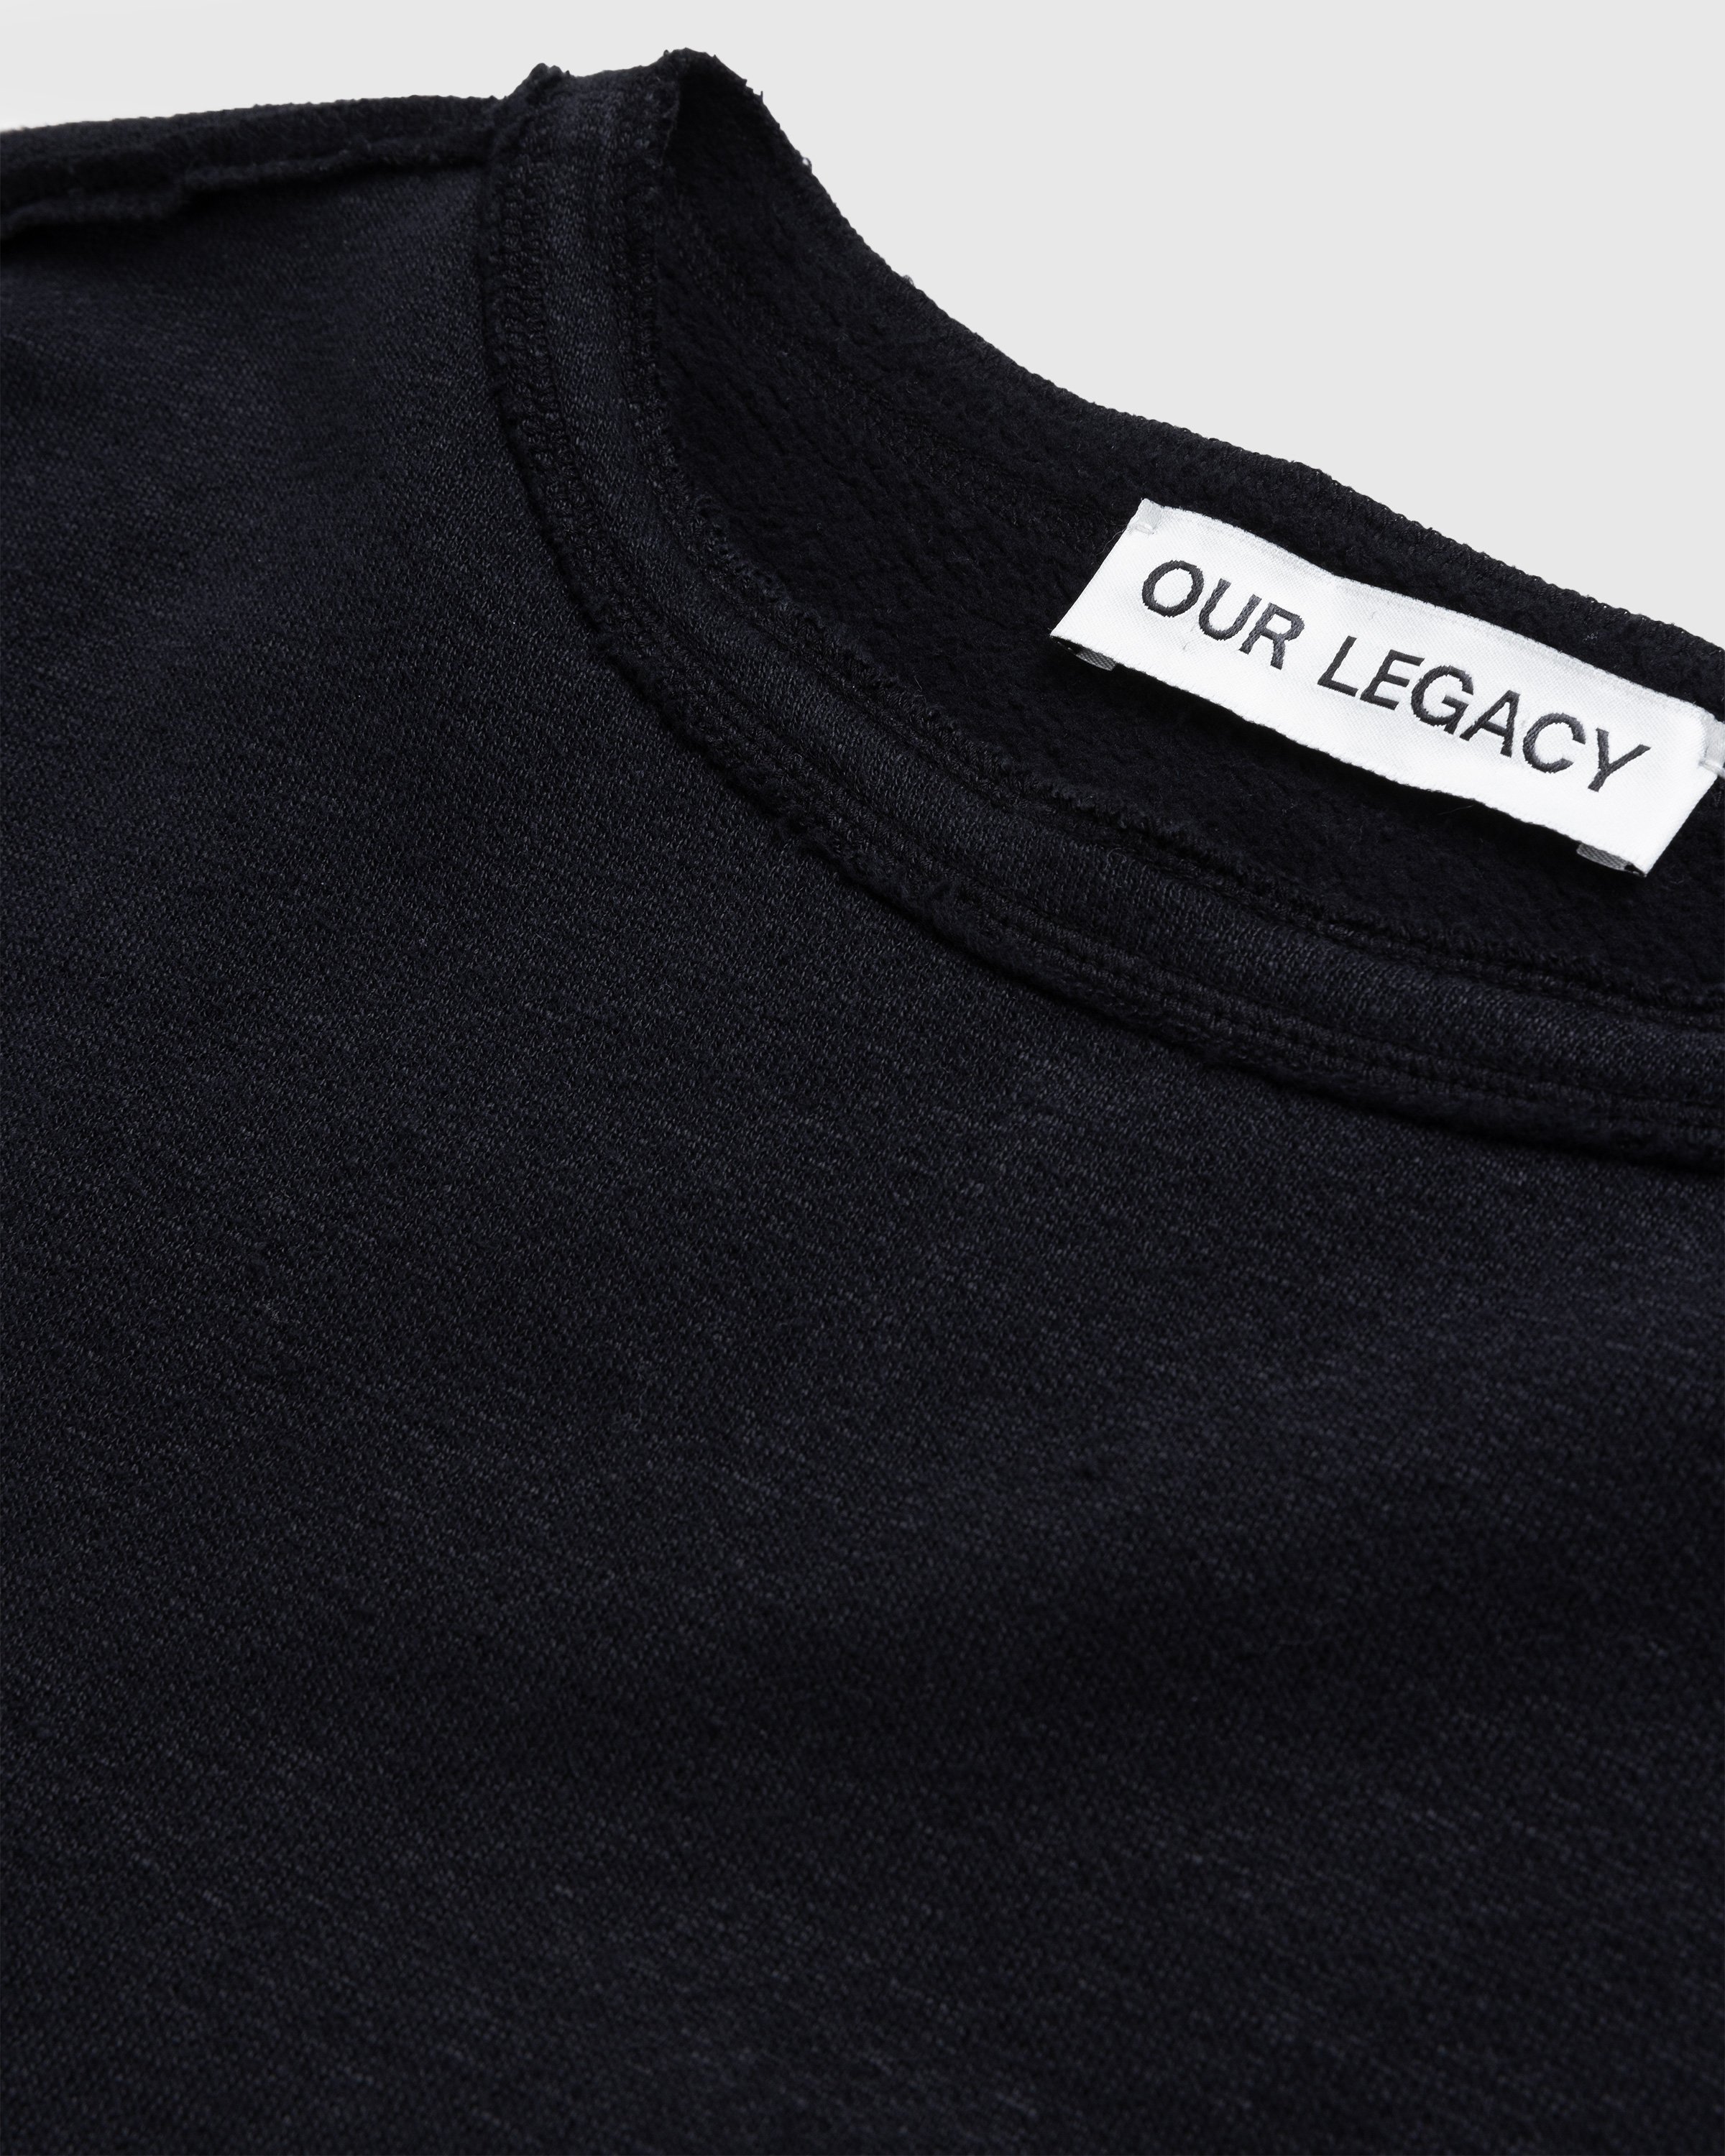 Our Legacy - Inverted Sweatshirt Black Hemp Loopback - Clothing - Black - Image 4